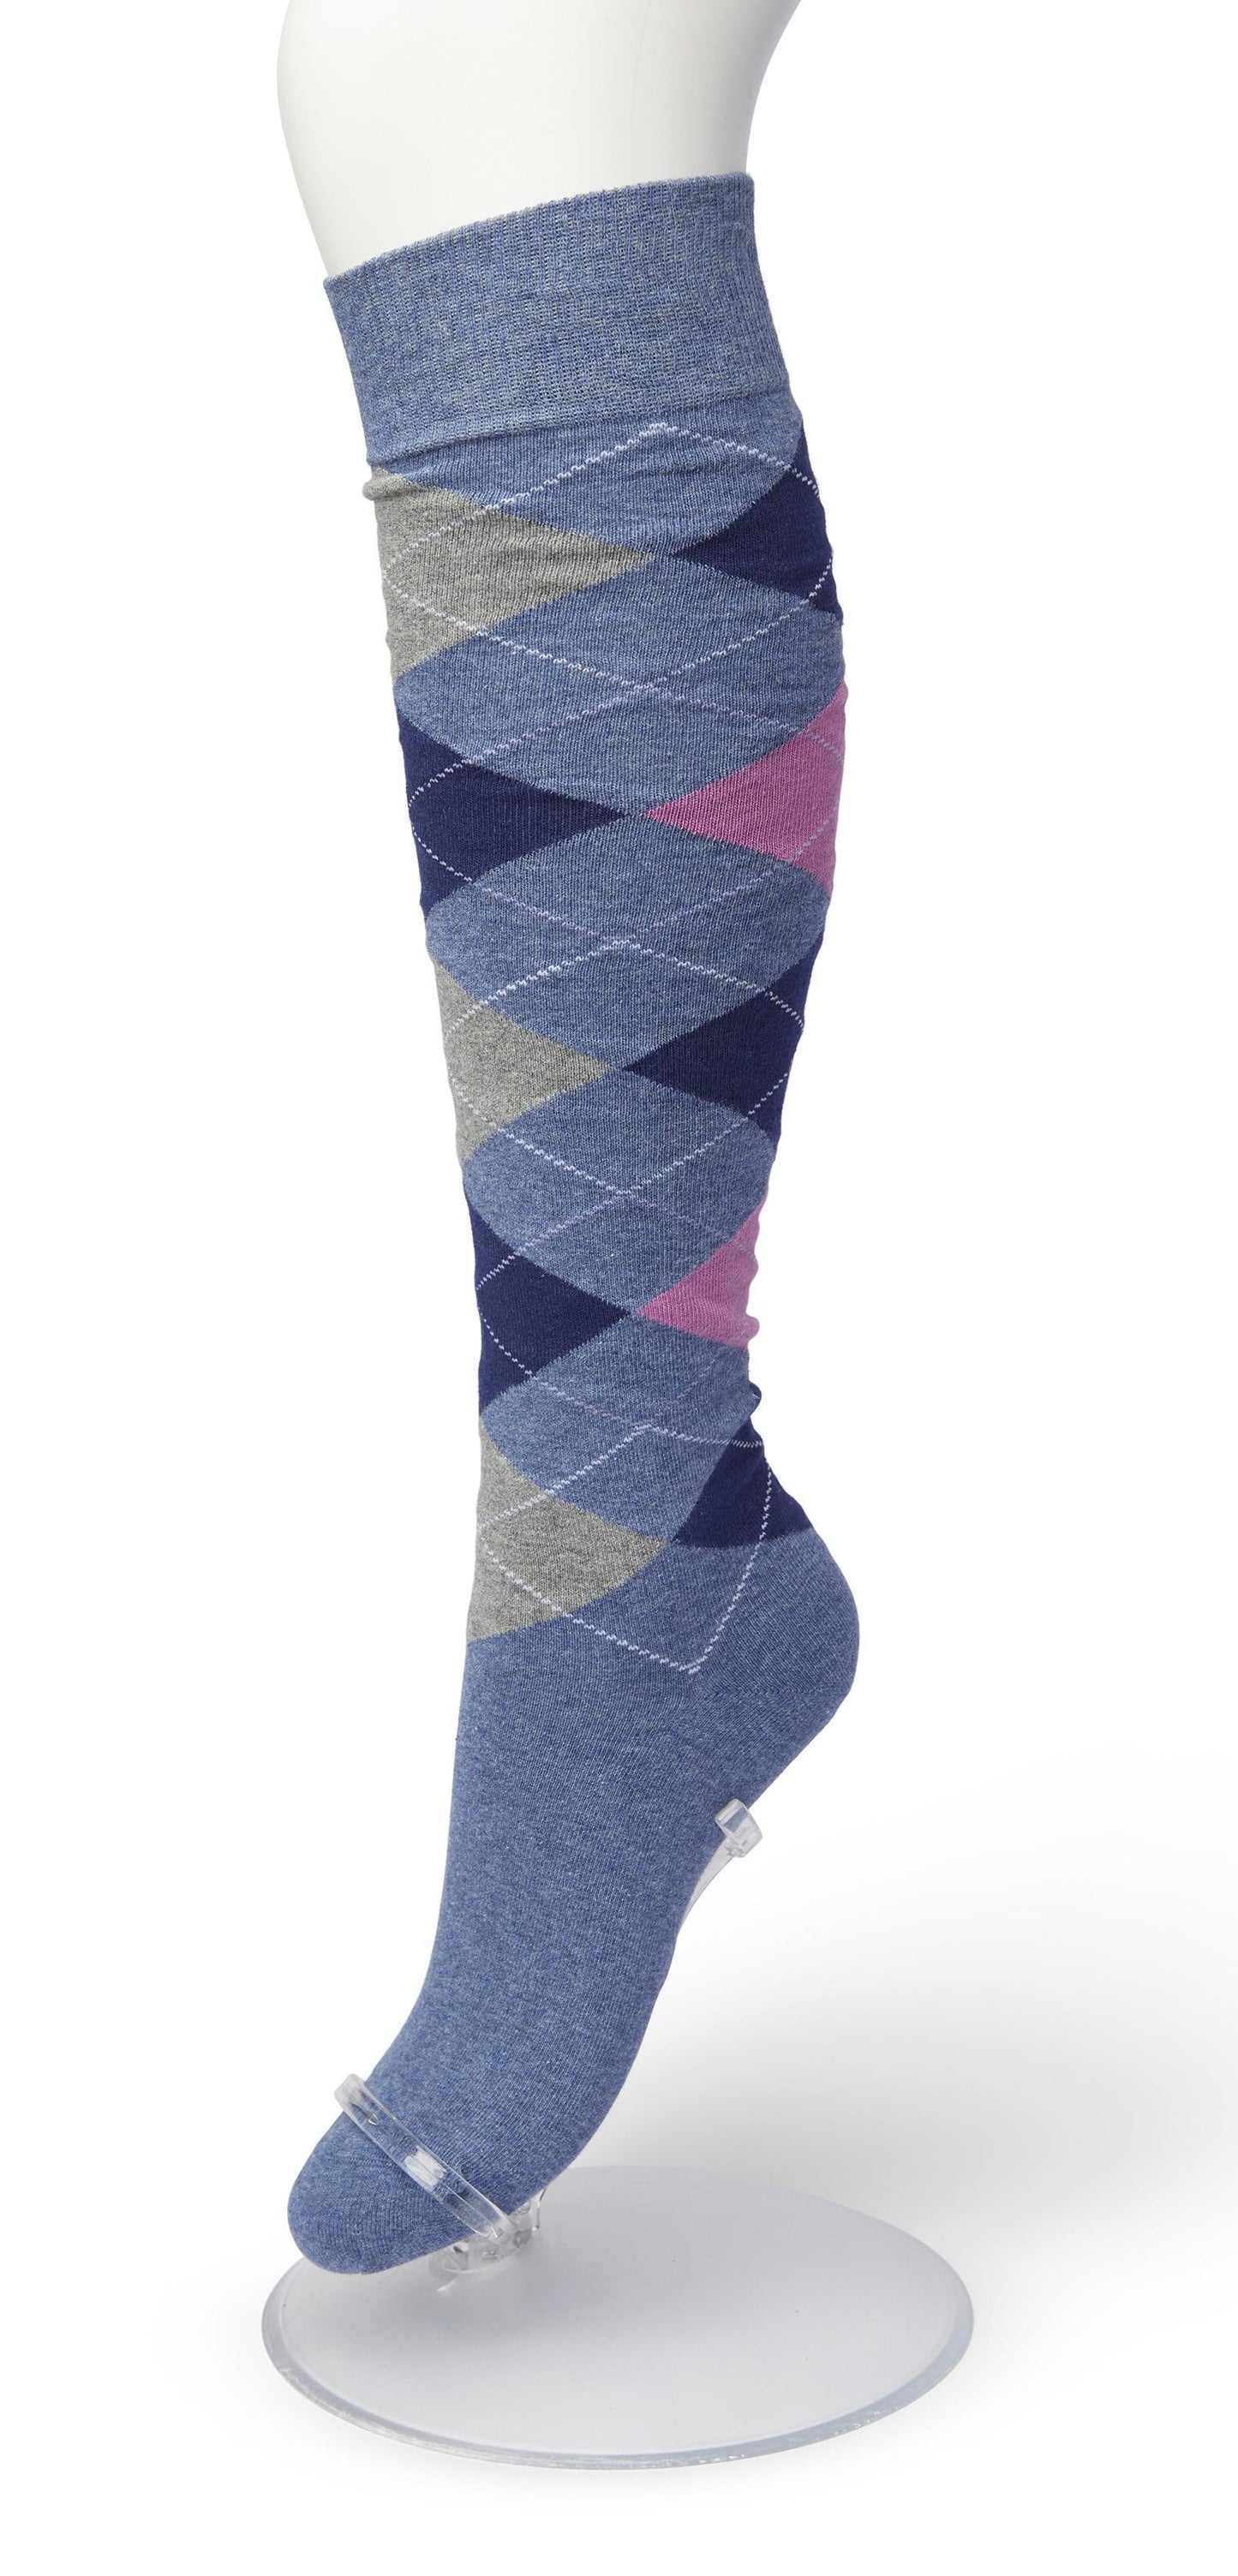 Bonnie Doon BP211505 Argyle Knee-highs - Golf style knee-high socks with a diamond argyle tartan check pattern in denim blue, pink, navy and pale grey.